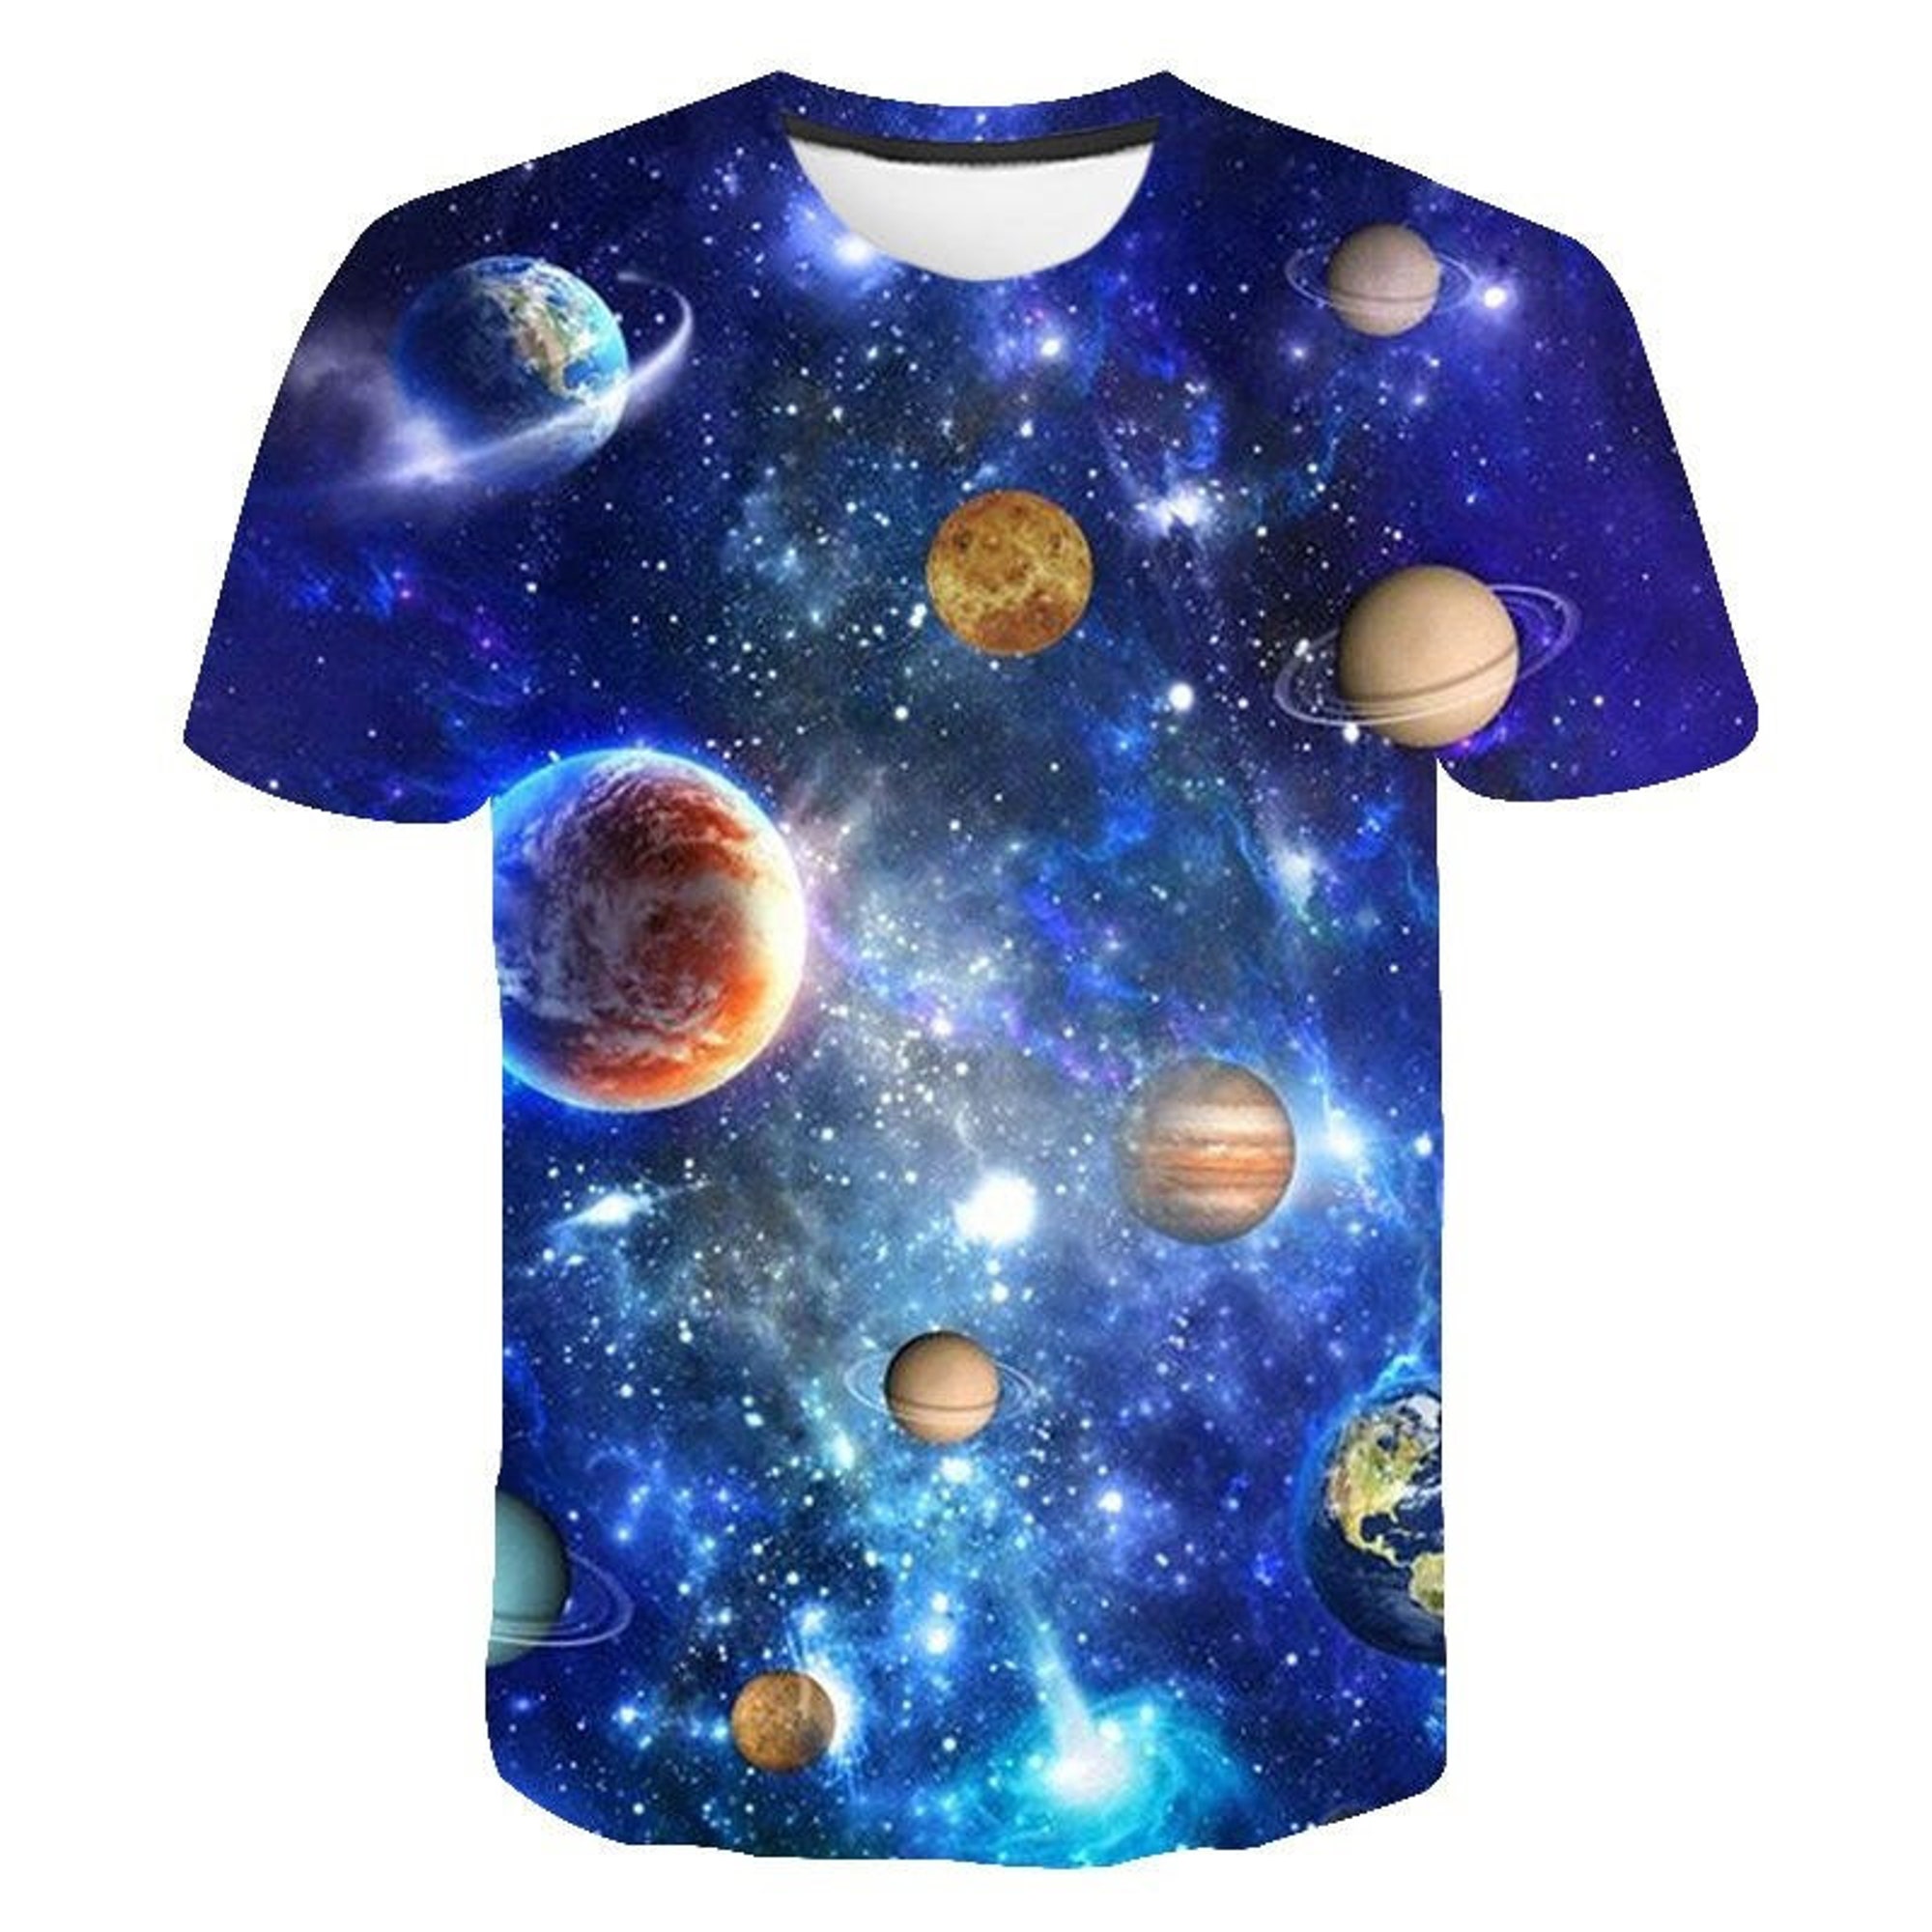 Planets galaxy shirt new T-shirt 3D